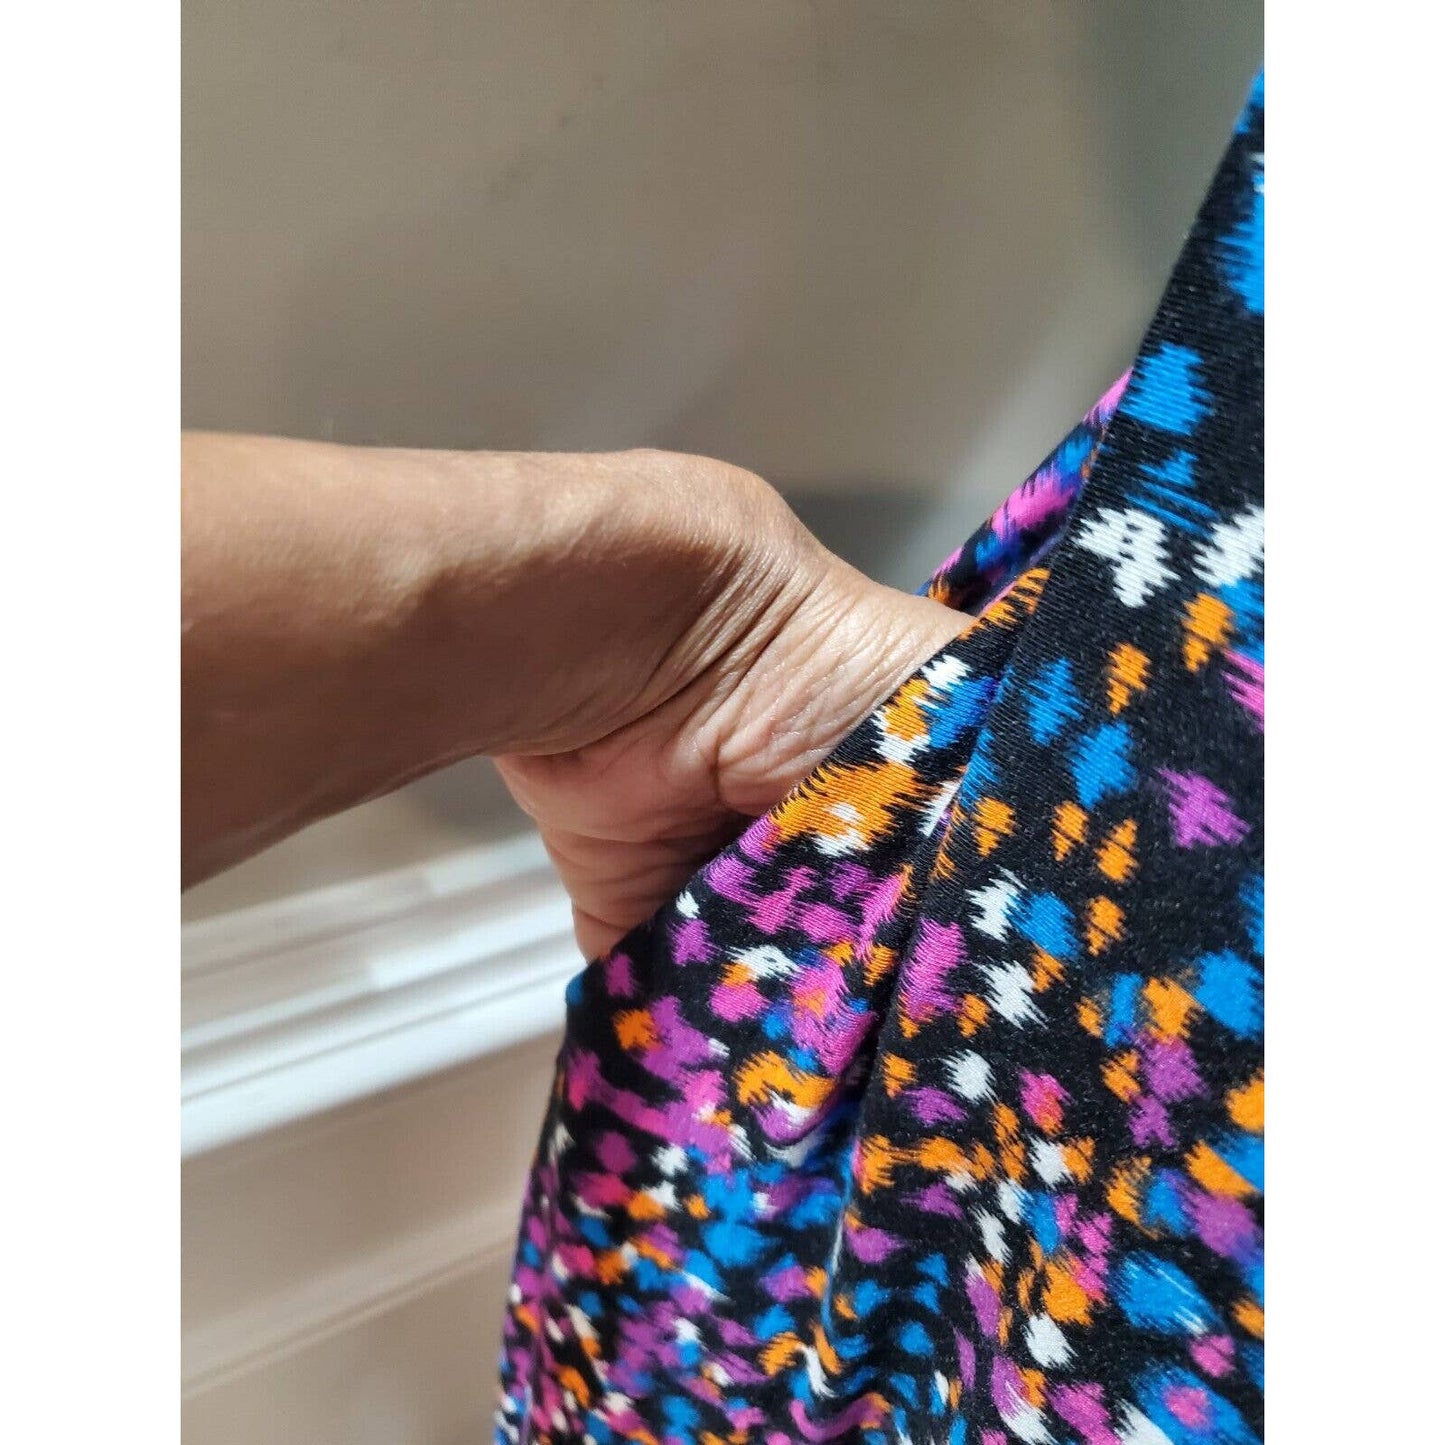 Jessica London Women Multicolor Round Neck Short Sleeve Long Maxi Dress Size 16W